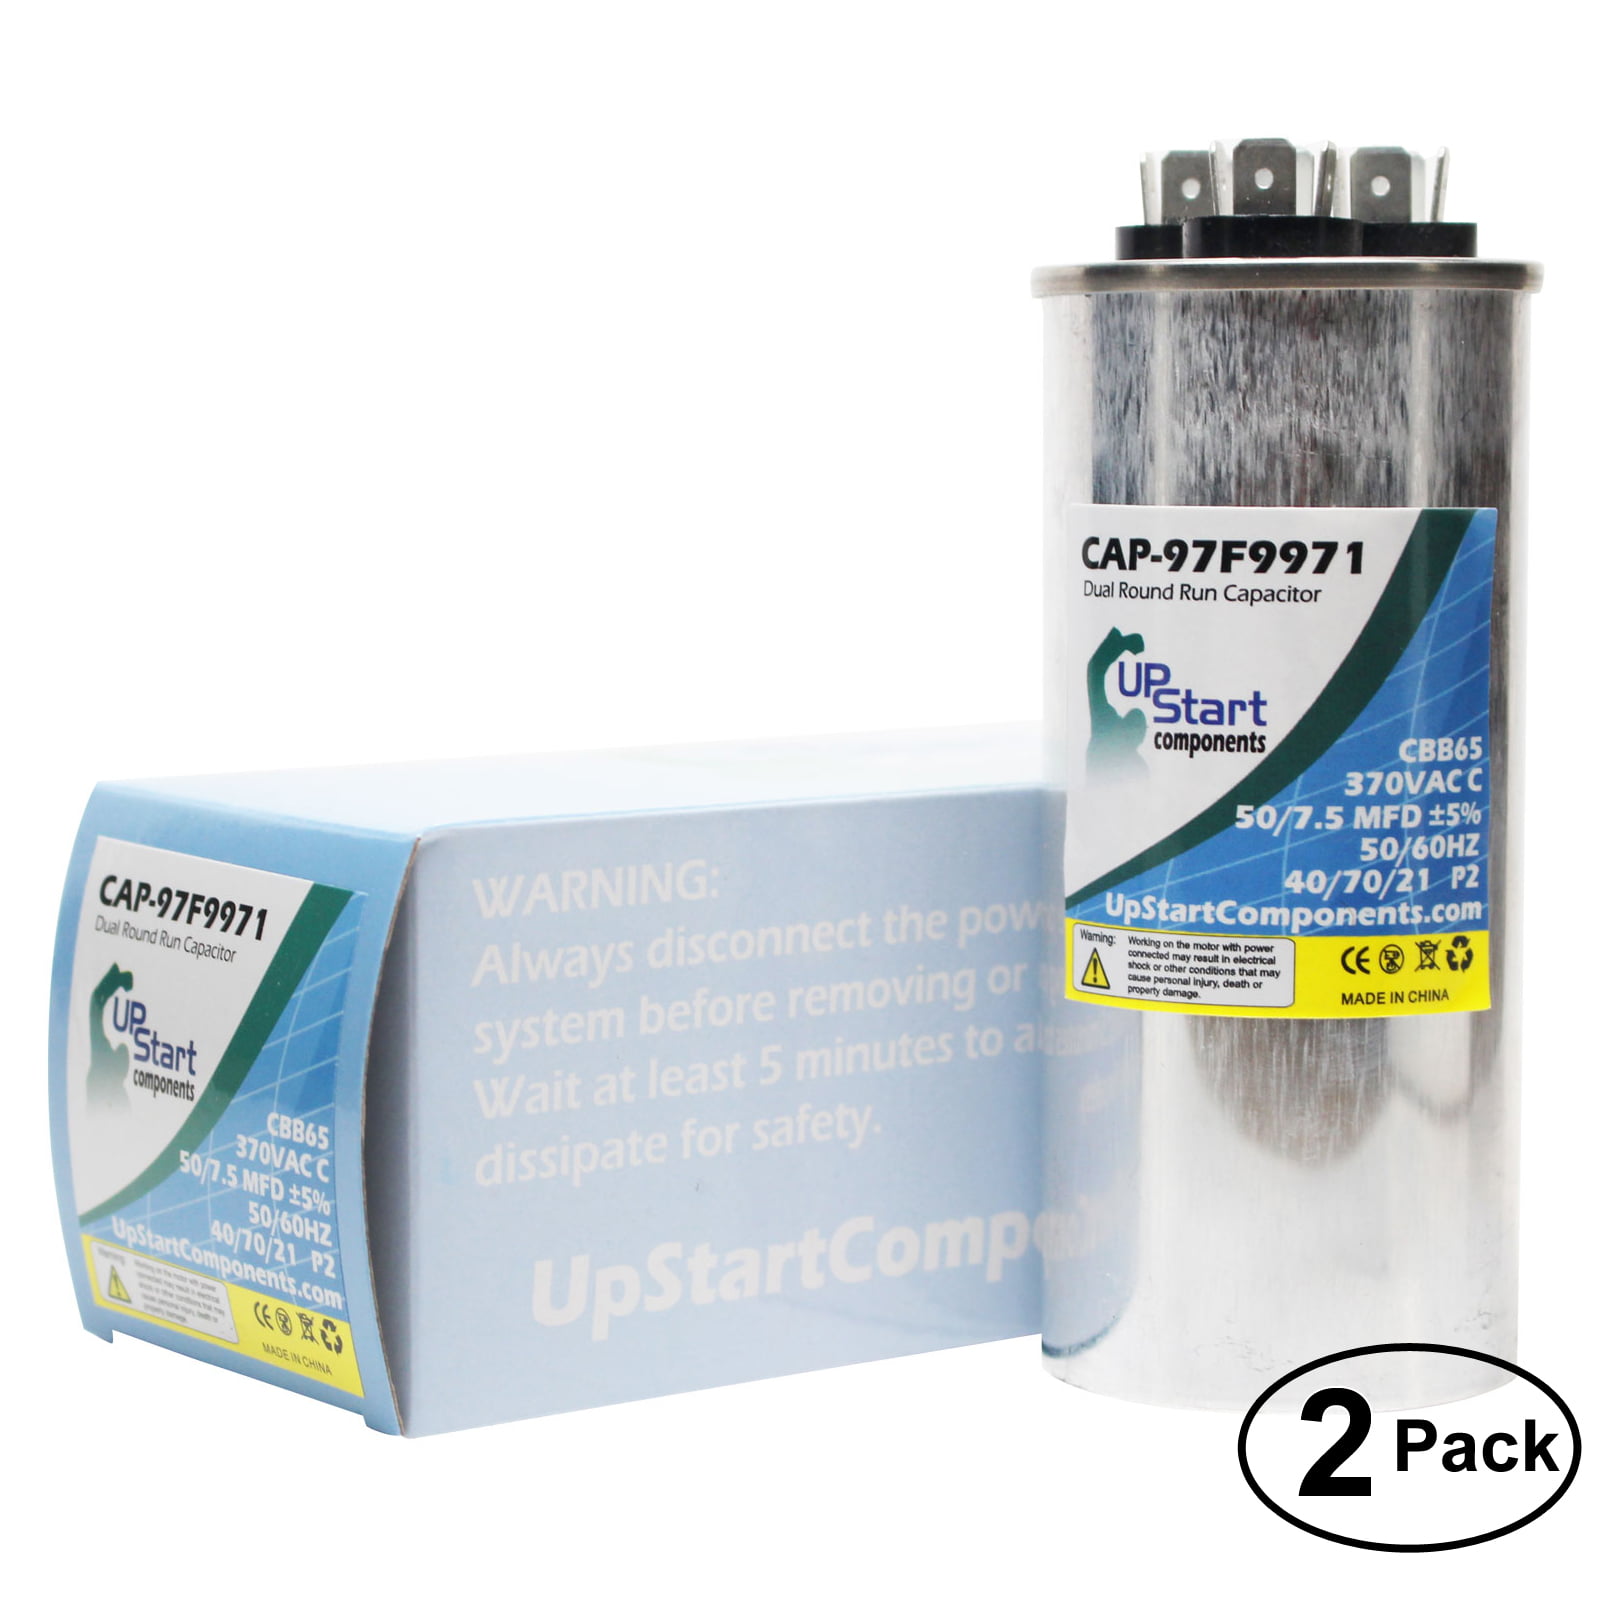 UpStart Components Brand CAP-97F9838 40/5 MFD 440 Volt Dual Round Run Capacitor Replacement for Amana/Goodman CAP050400440RT 